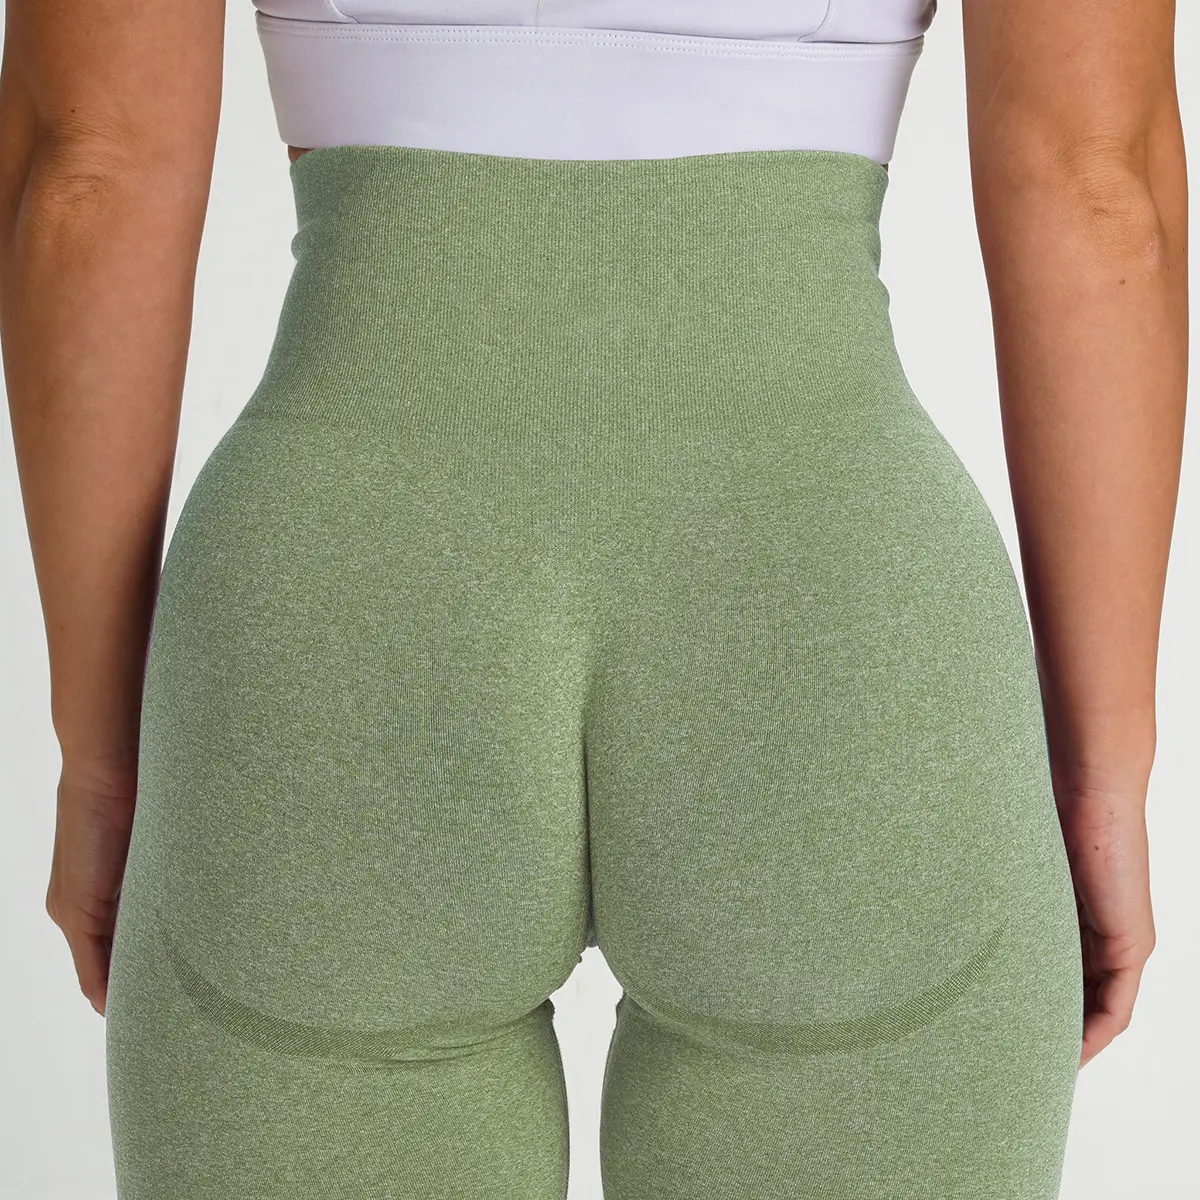 Seamless Yoga Pants Shorts Women High Waist Hip Lift Sports Running Slim Leggings Female Pants Grass Green Curve Short